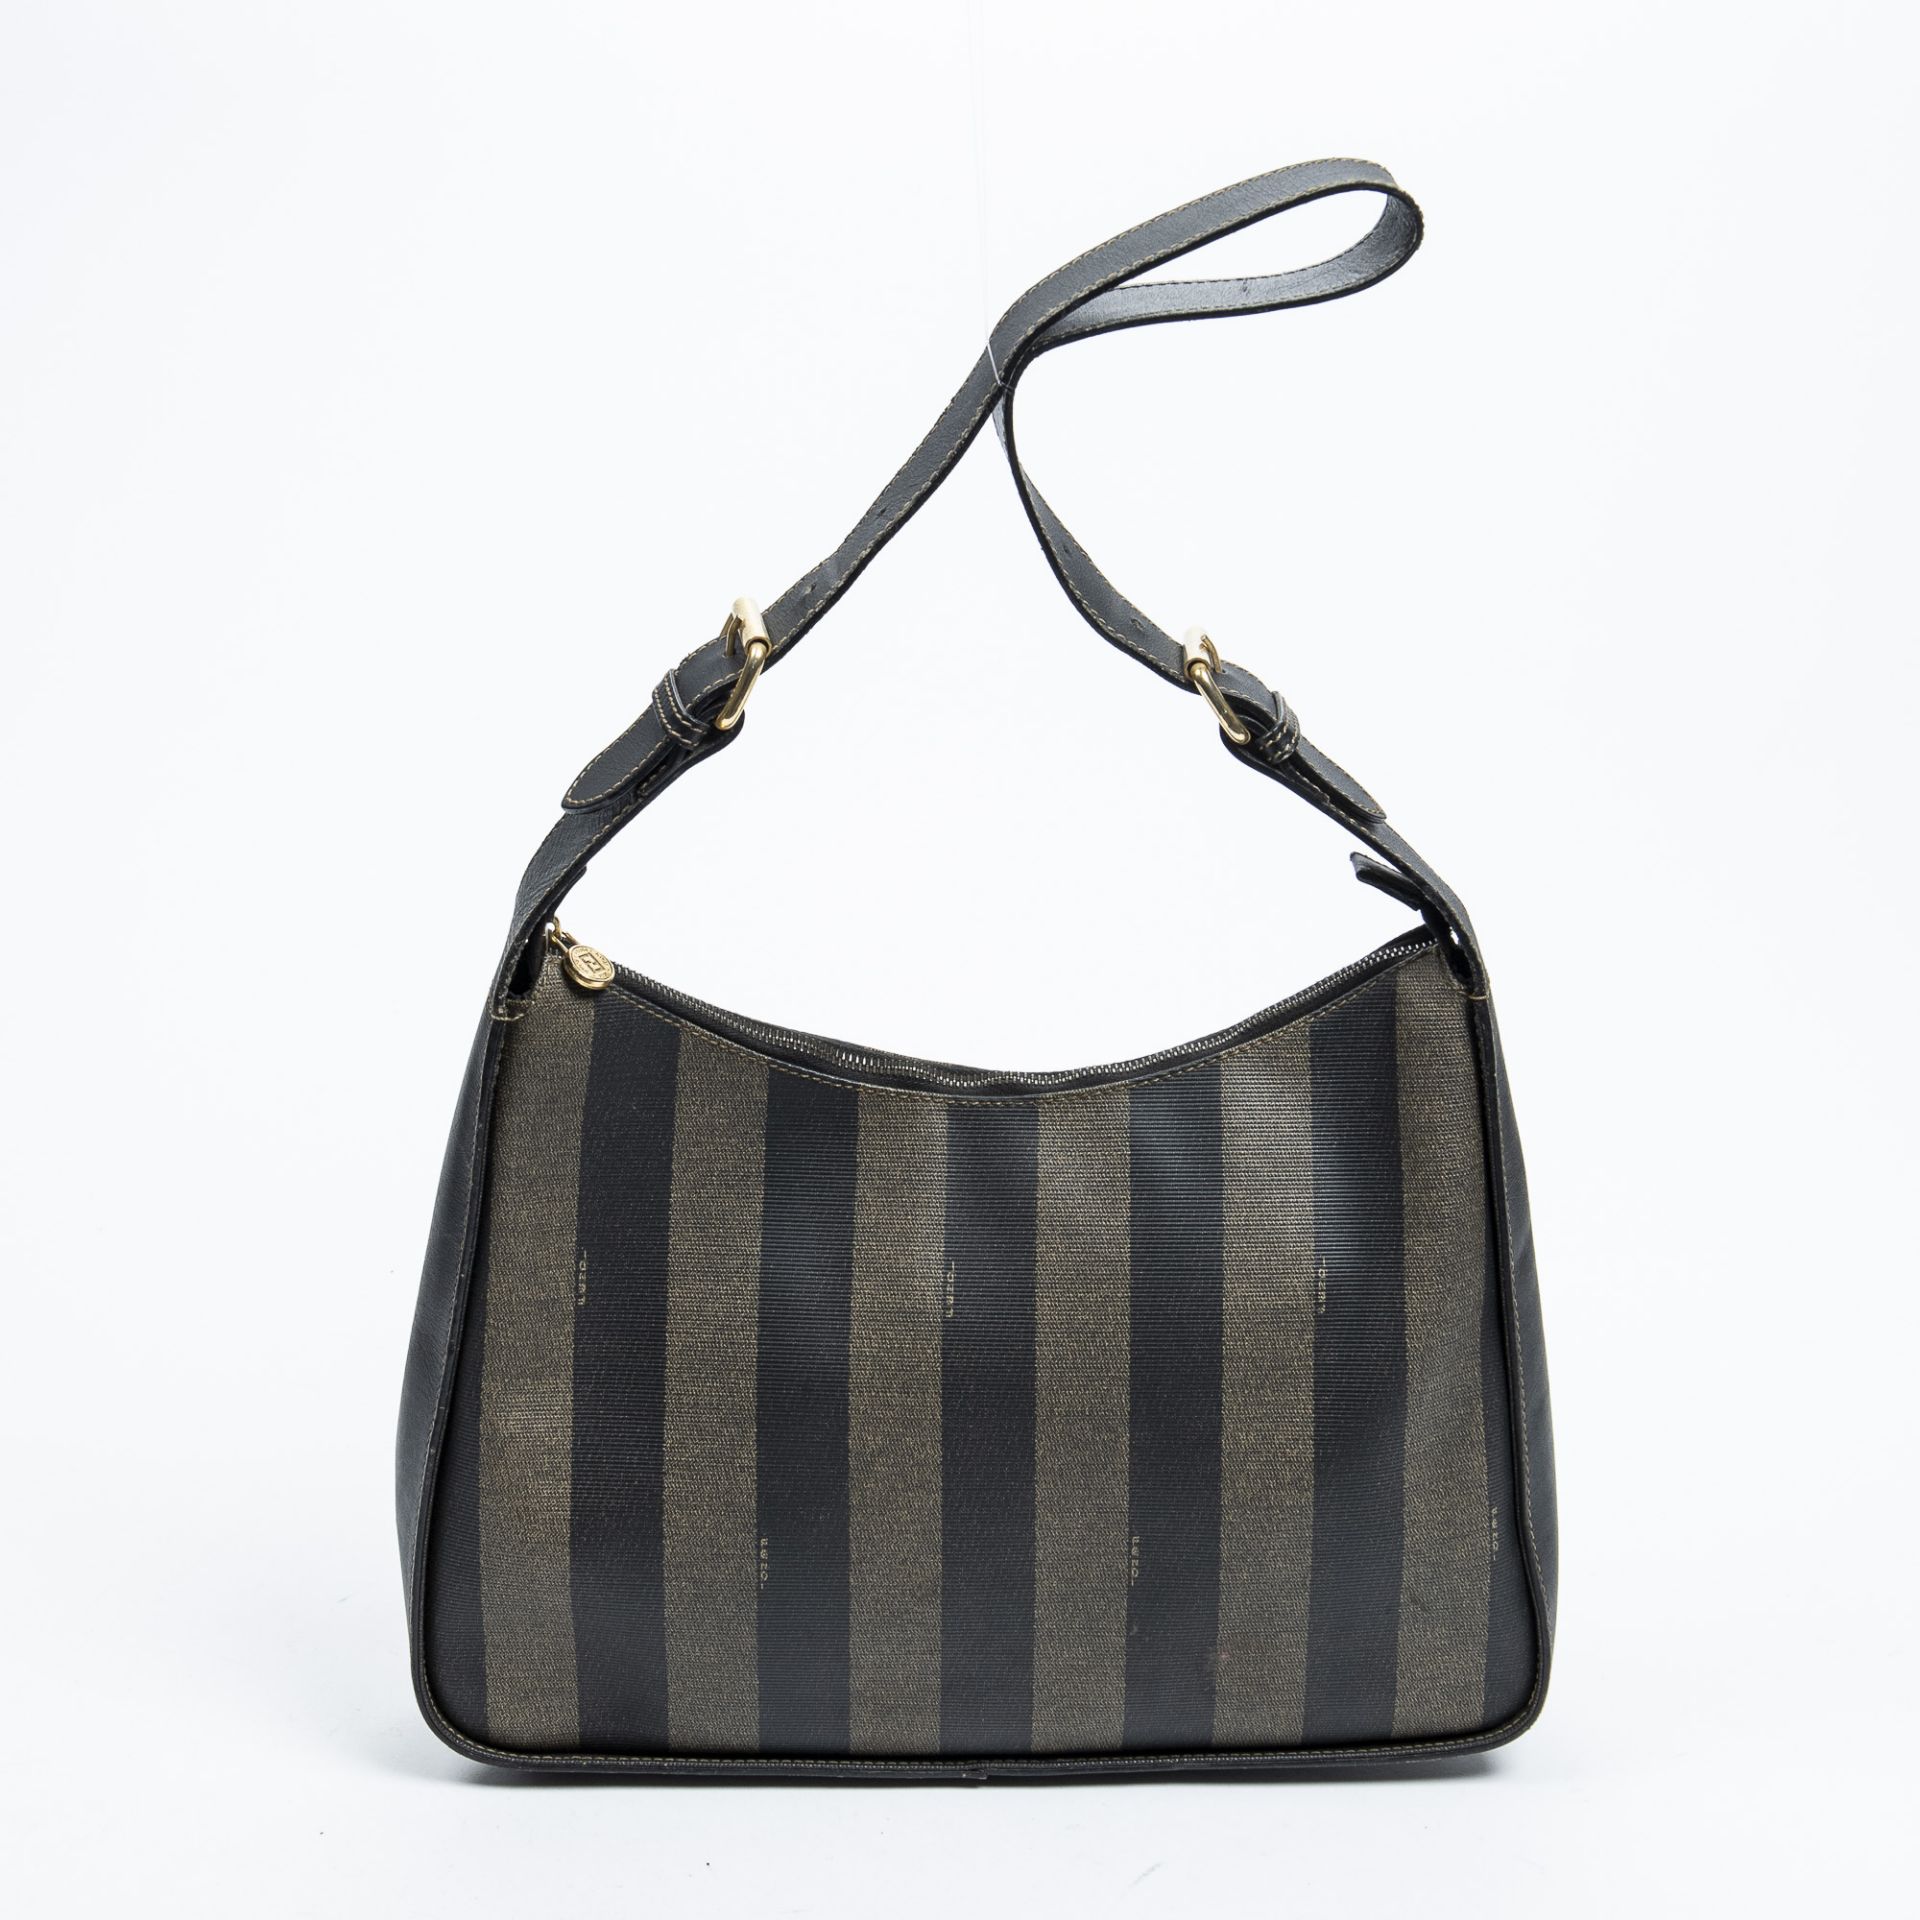 RRP £845.00 Lot To Contain 1 Fendi Coated Canvas Vintage Hobo Bag Shoulder Bag In Khaki/Black - 34,